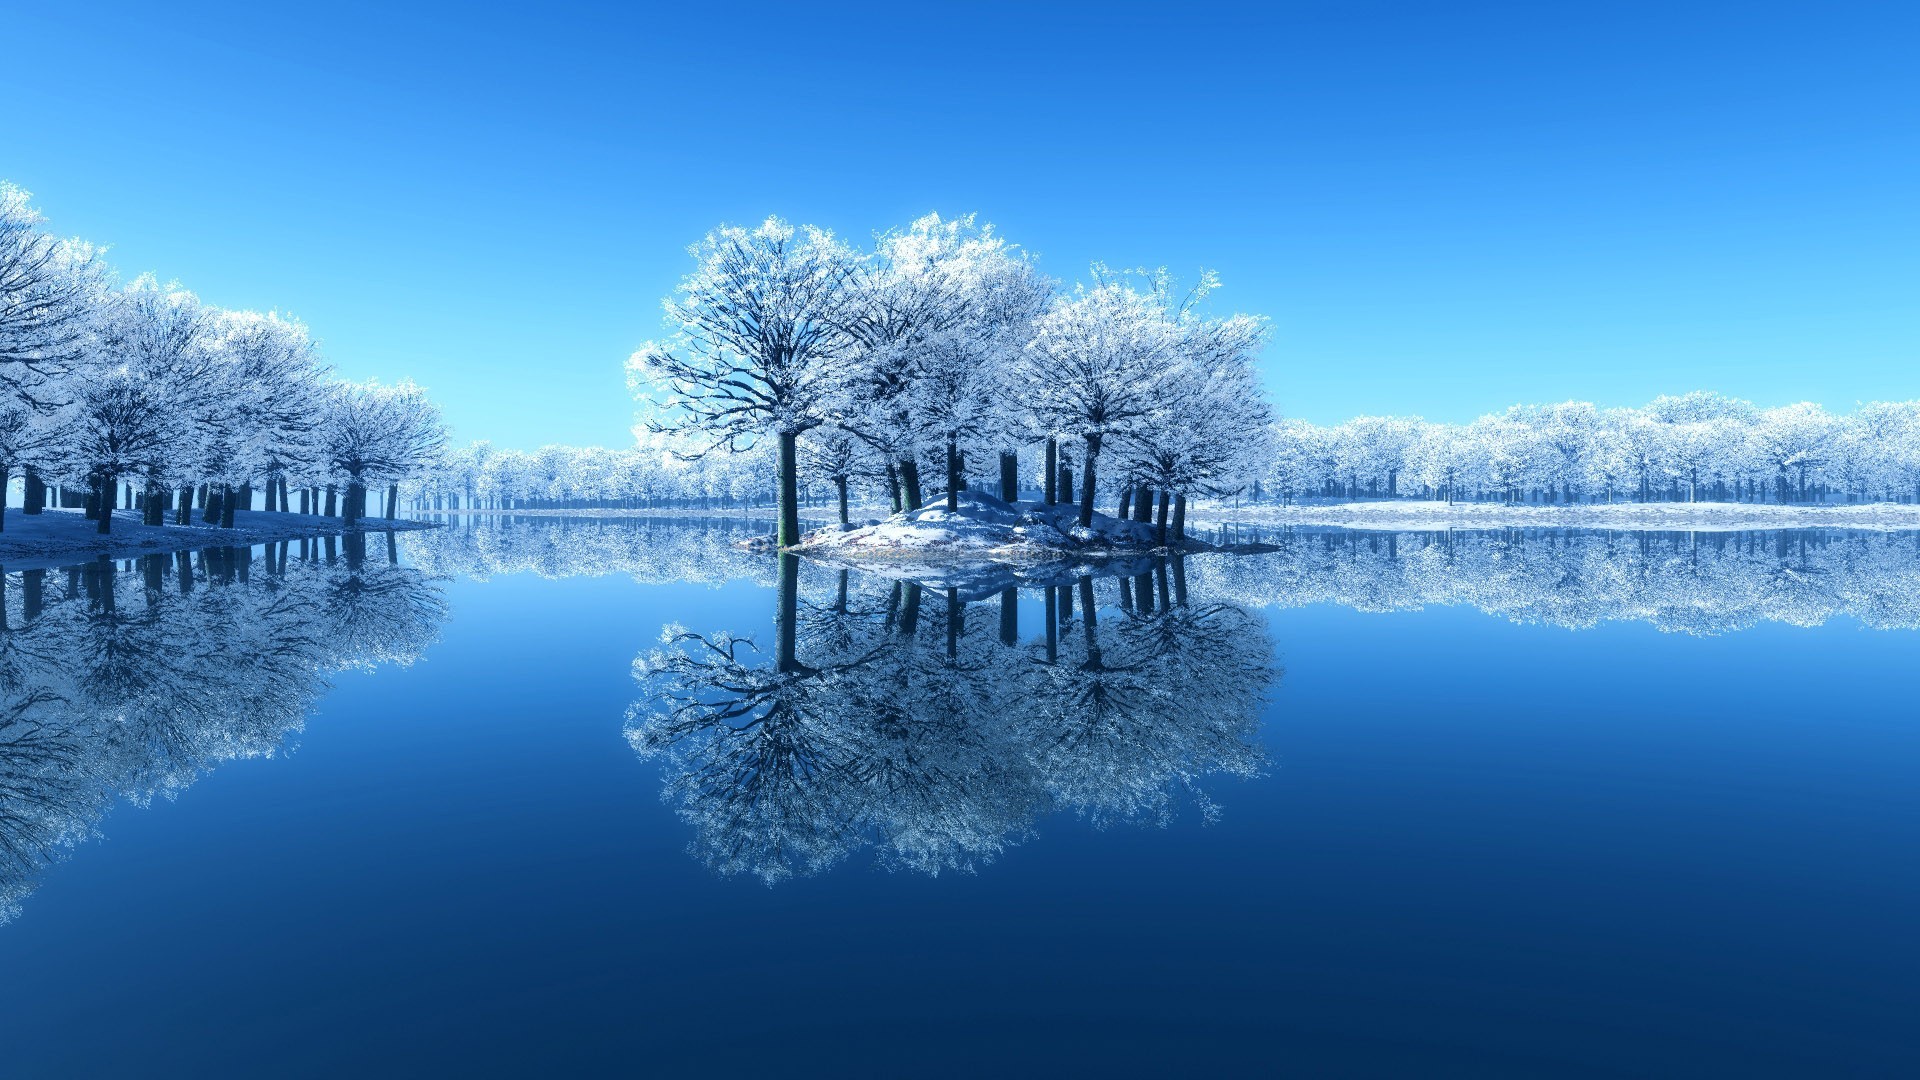 General 1920x1080 winter water nature landscape snow reflection blue cyan